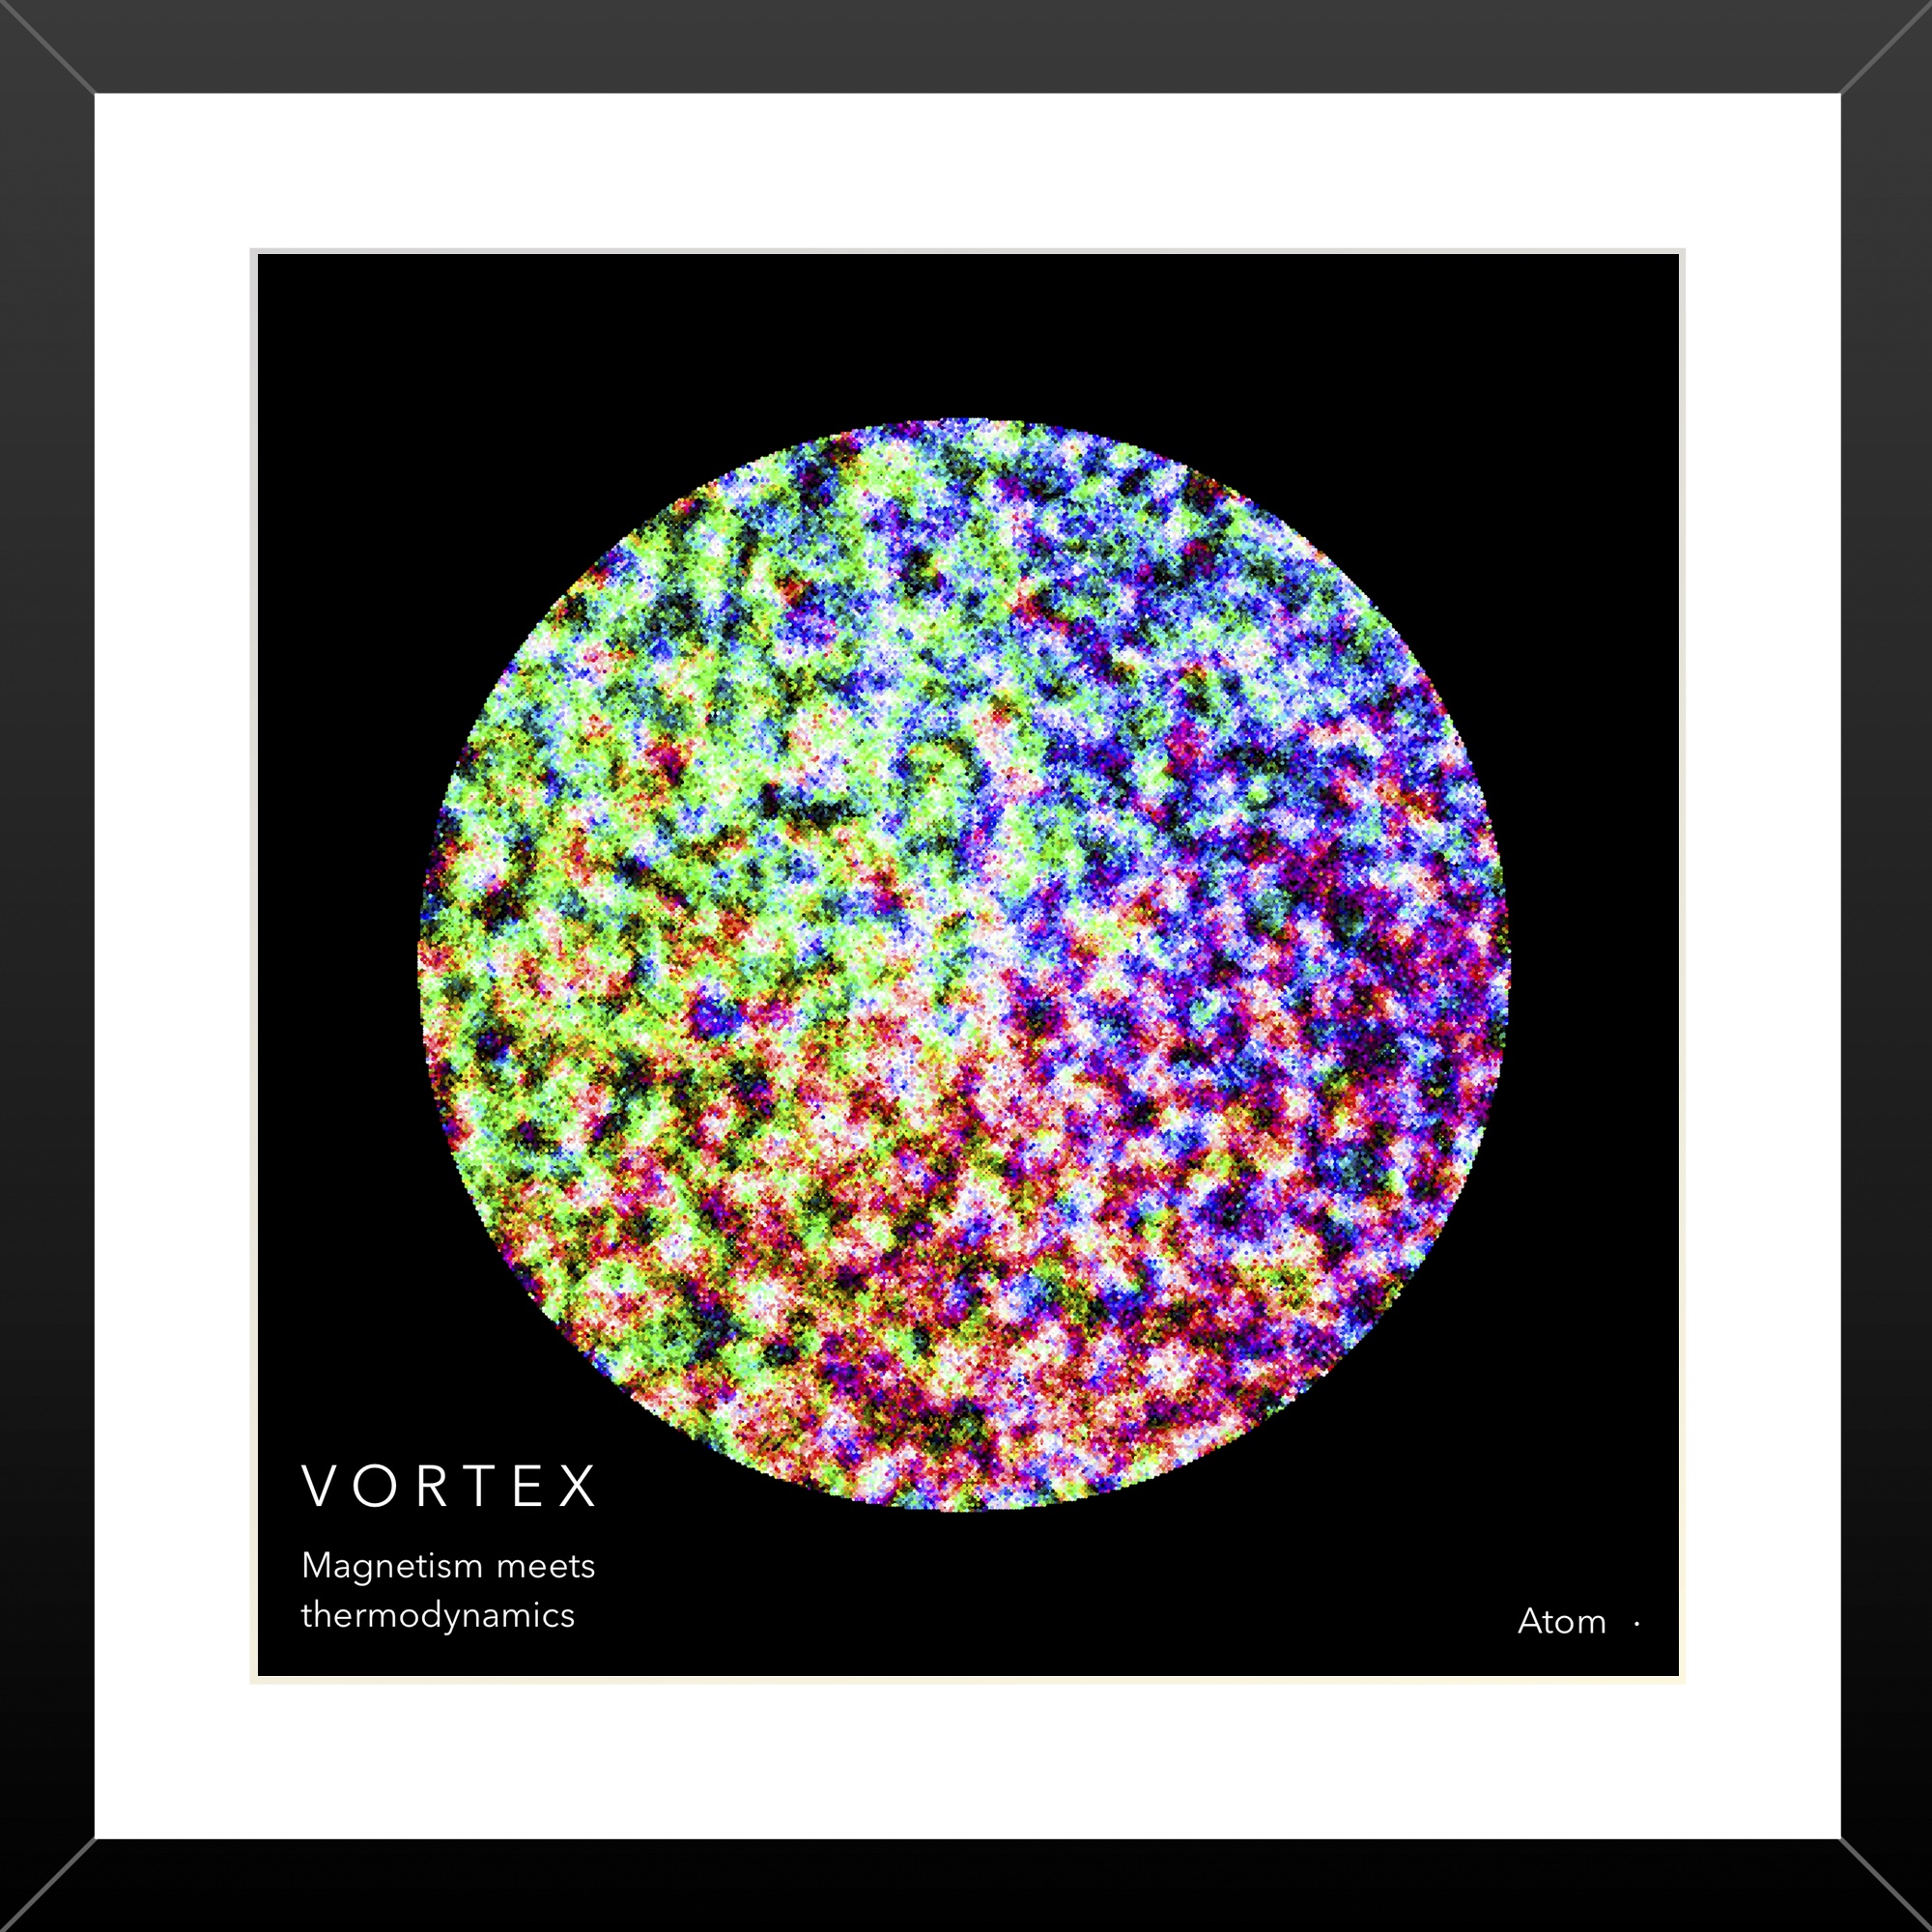 Vortex: magnetism meets thermodynamics